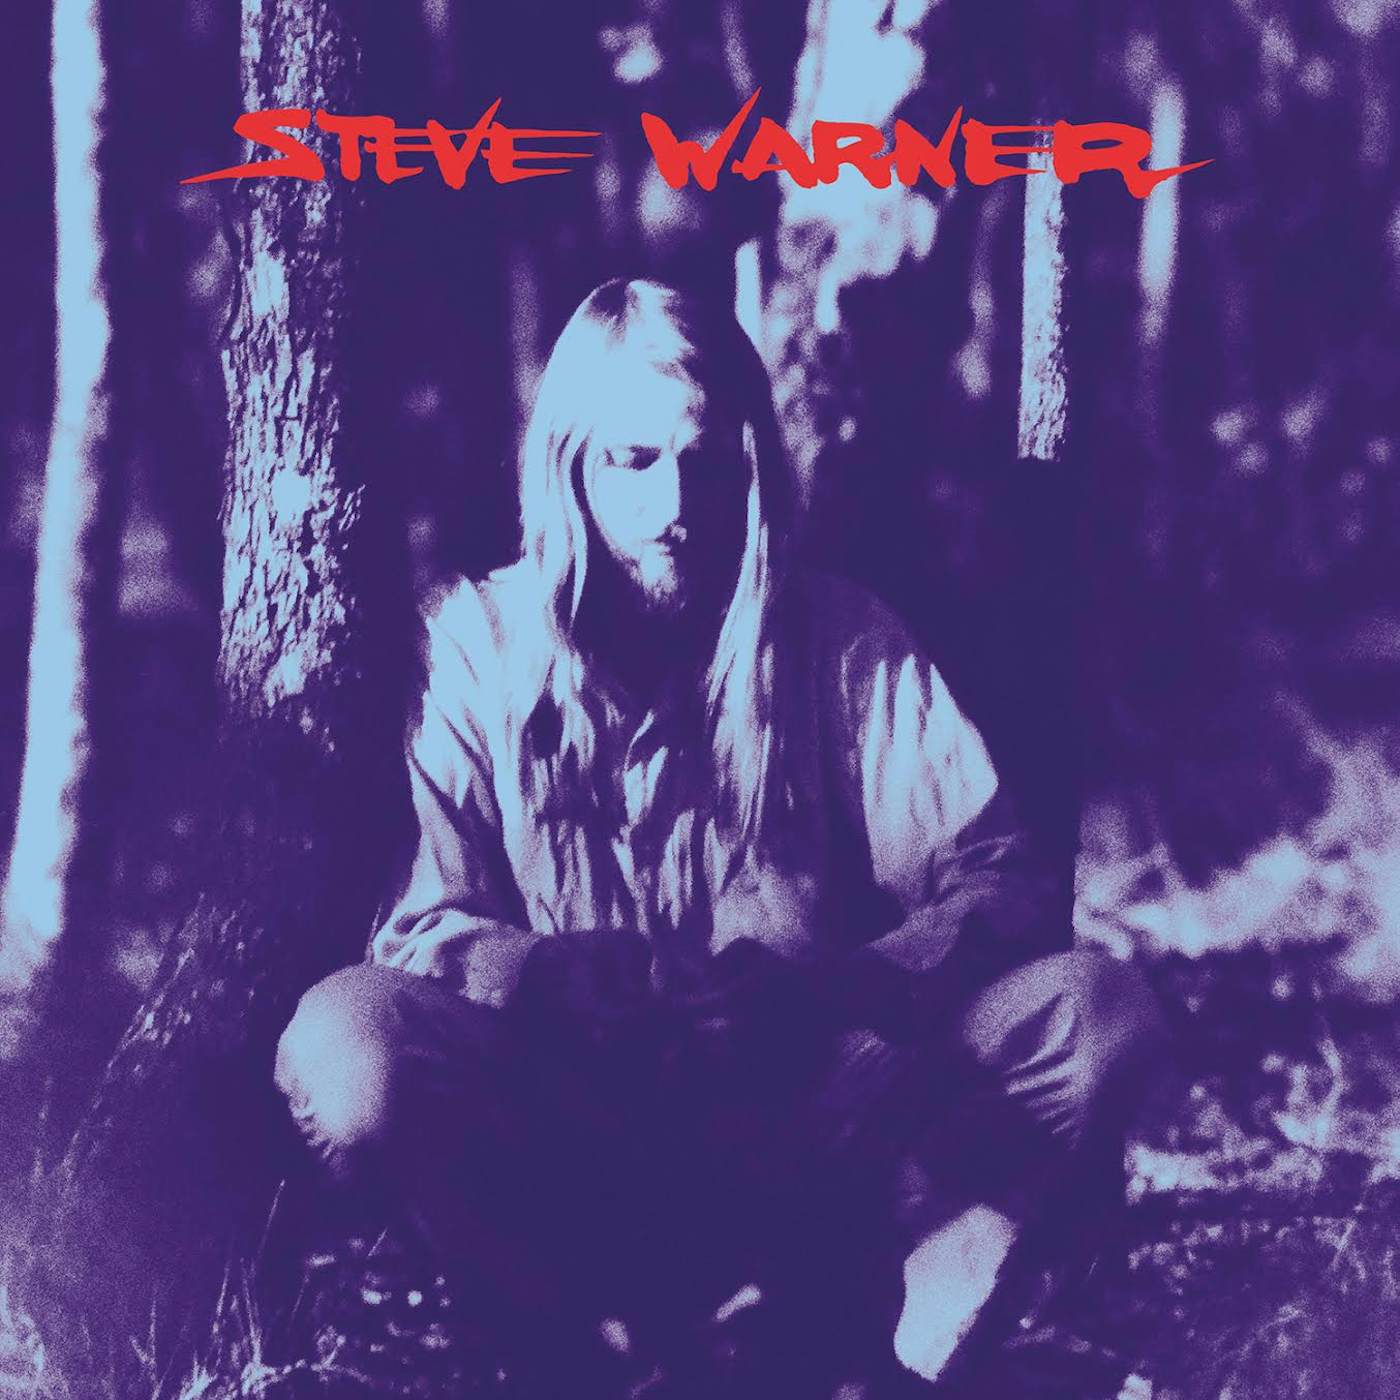 Steve Warner Vinyl Record